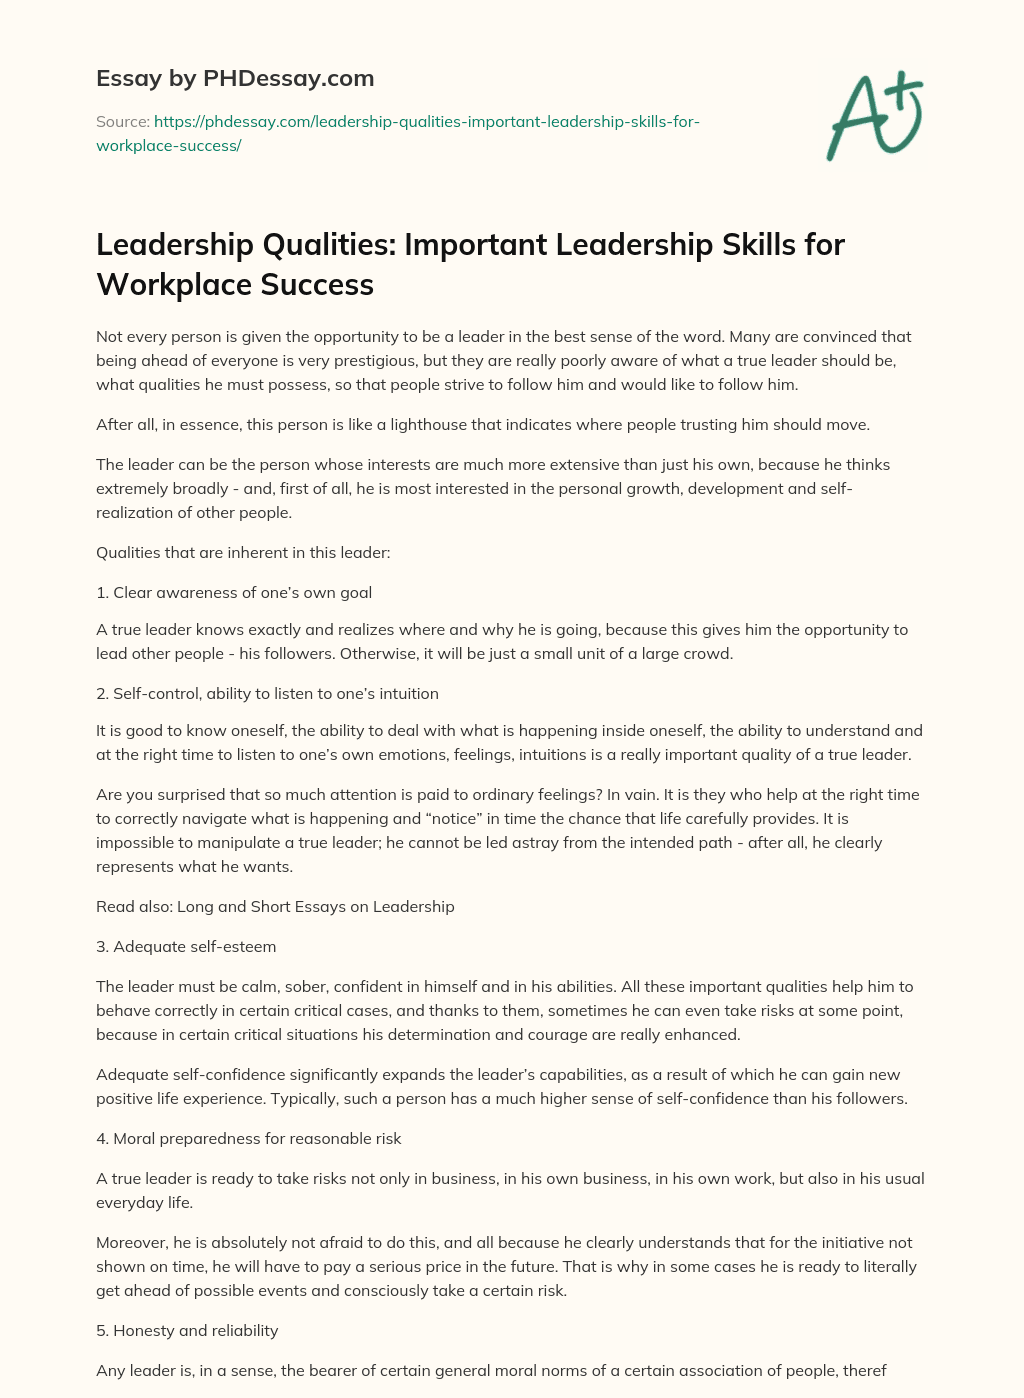 Leadership Qualities: Important Leadership Skills for Workplace Success essay